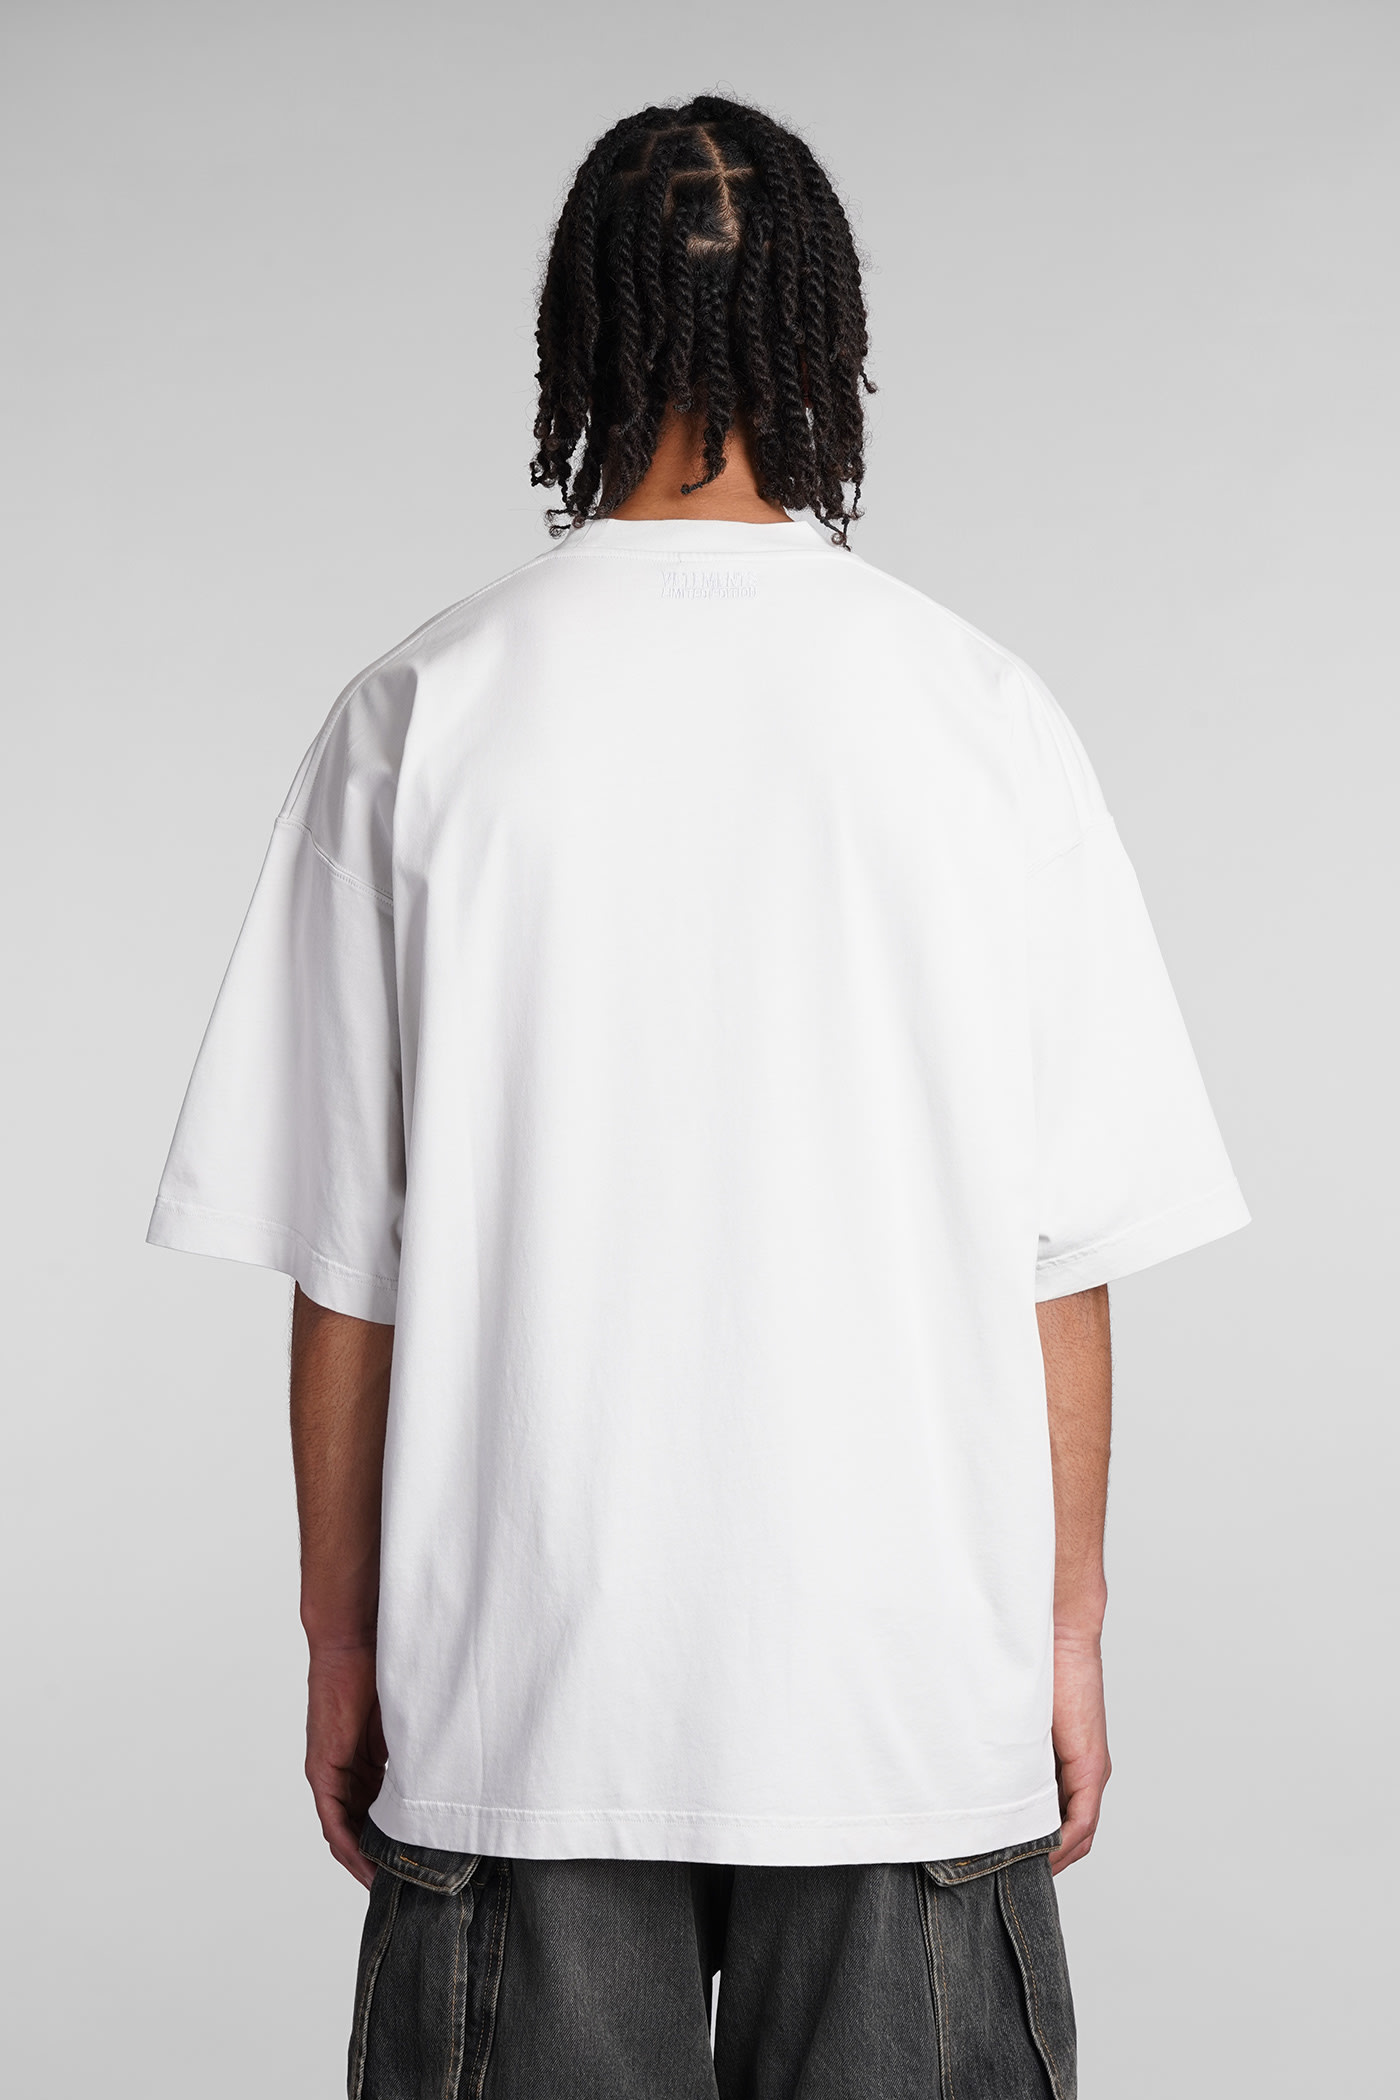 Shop Vetements T-shirt In Grey Cotton